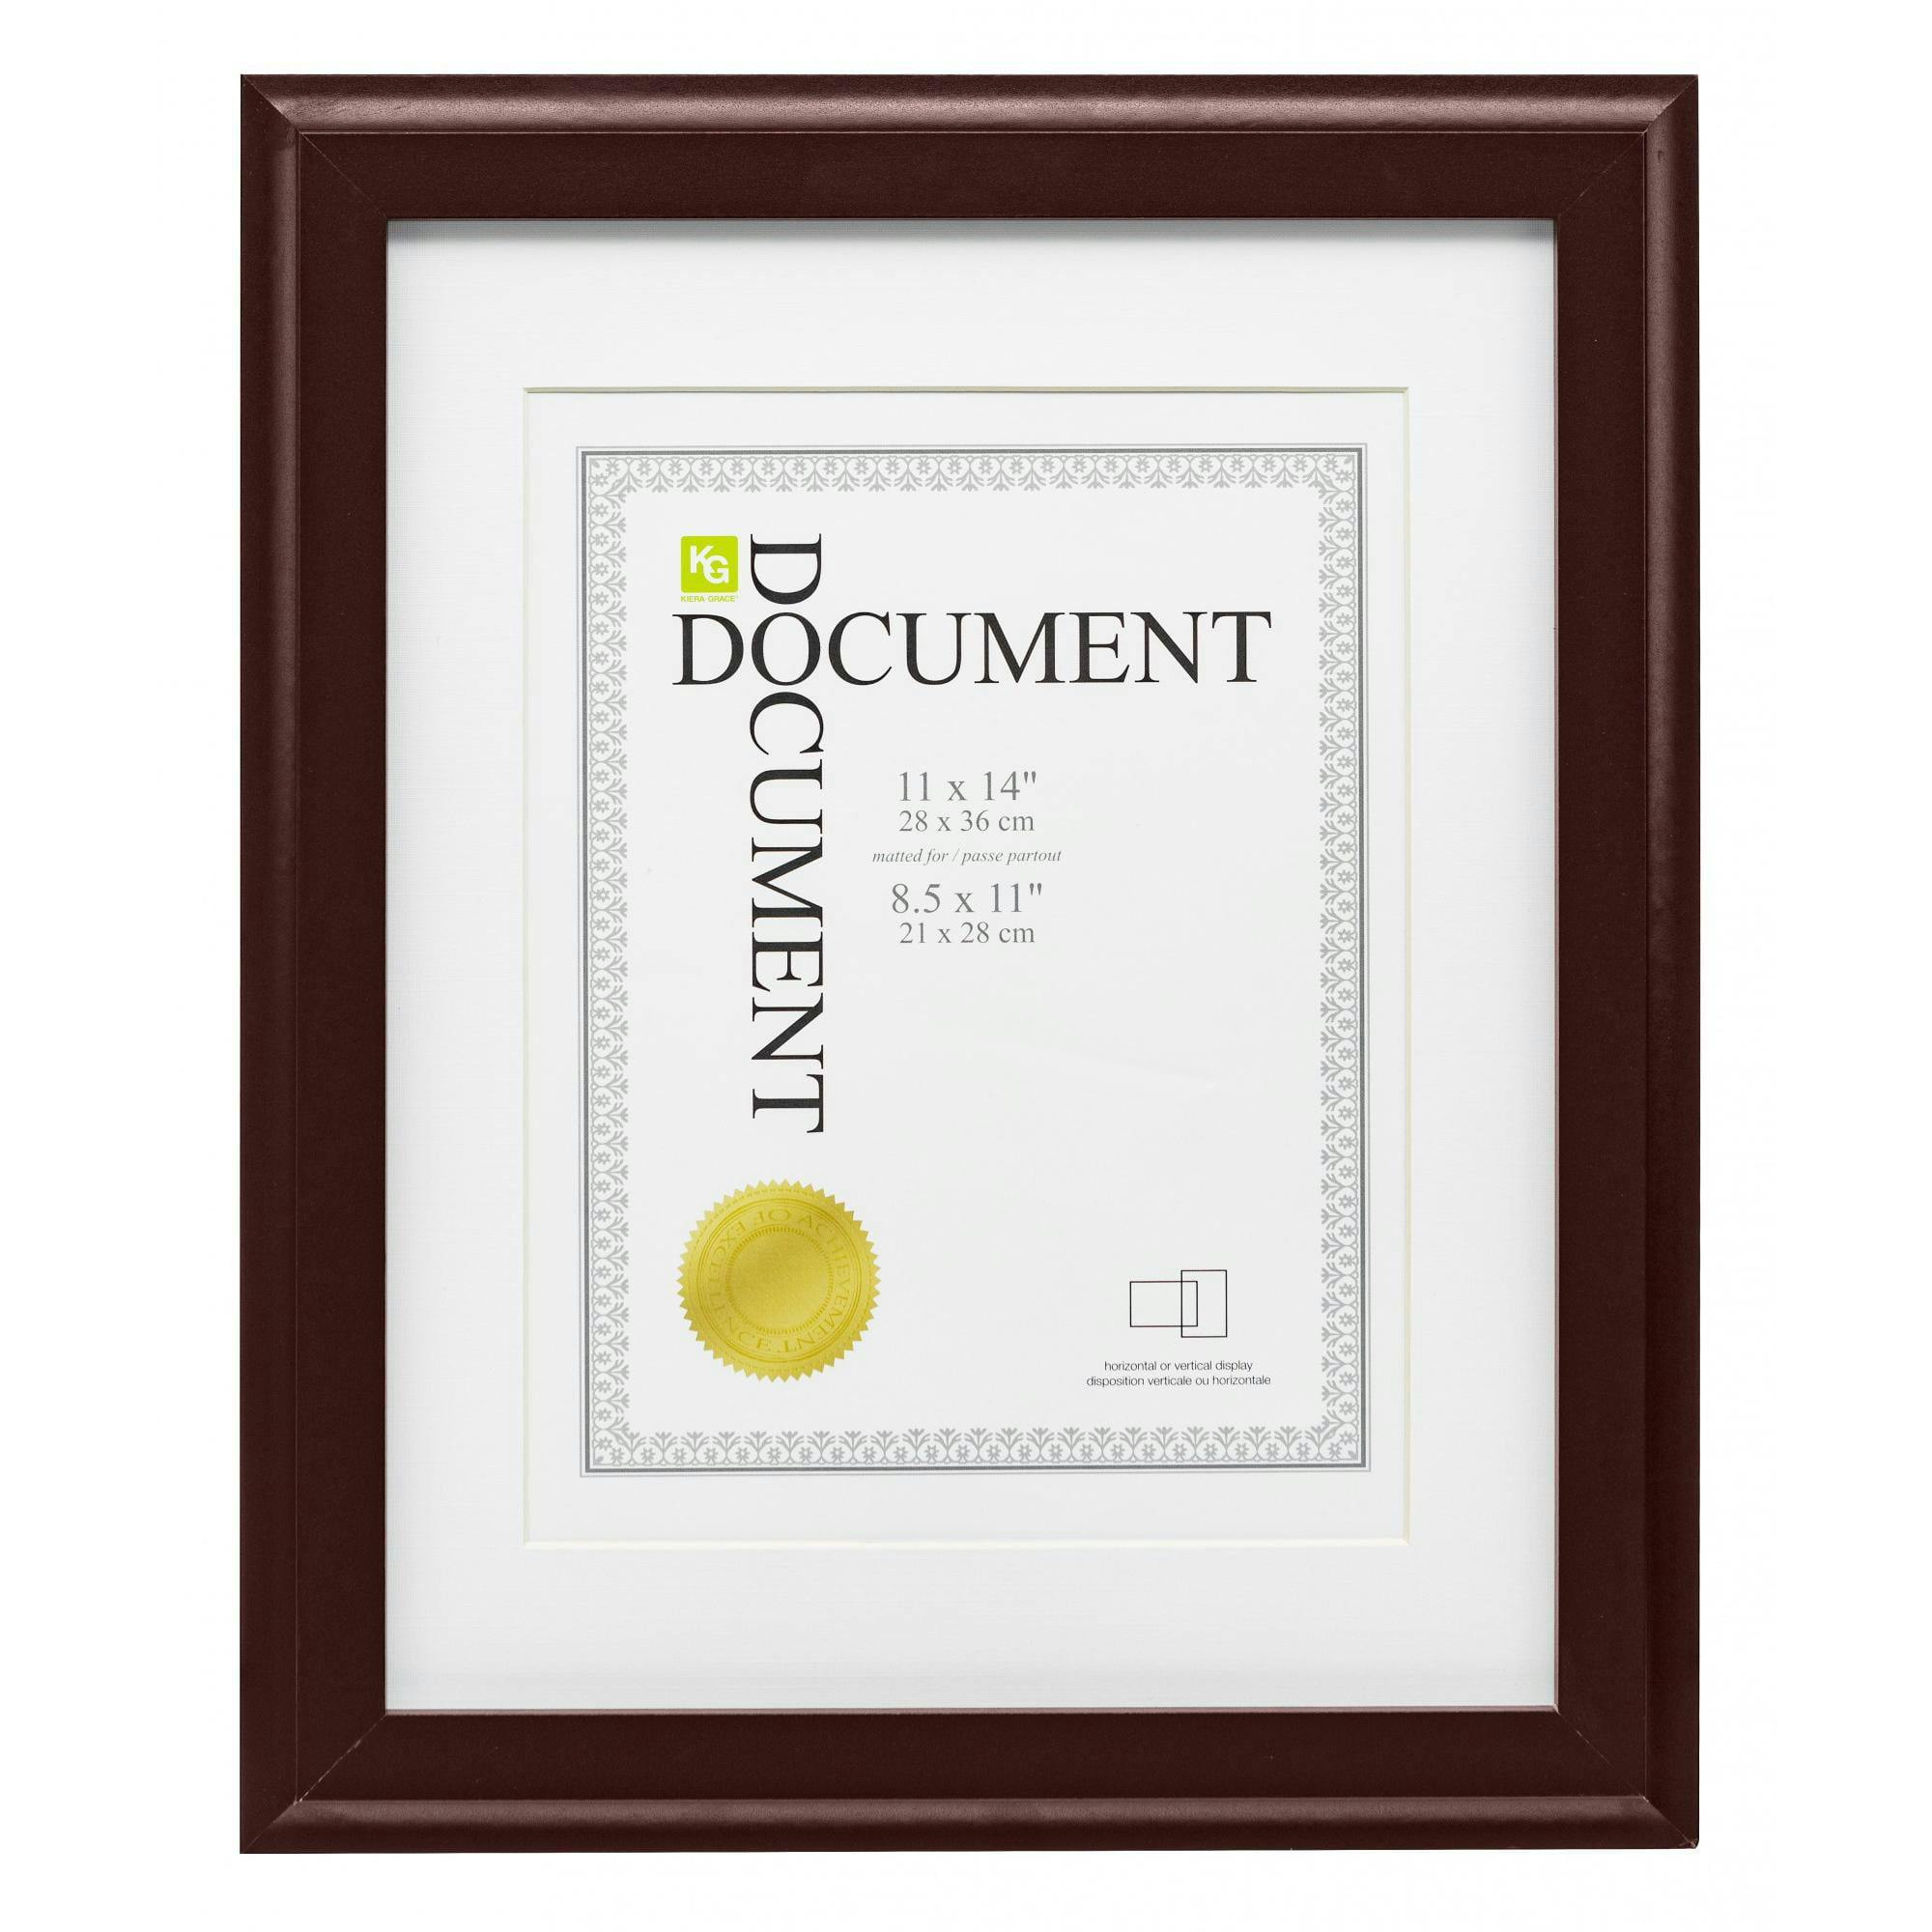 Elegant Oxford Black MDF Document Frame with Glass Cover